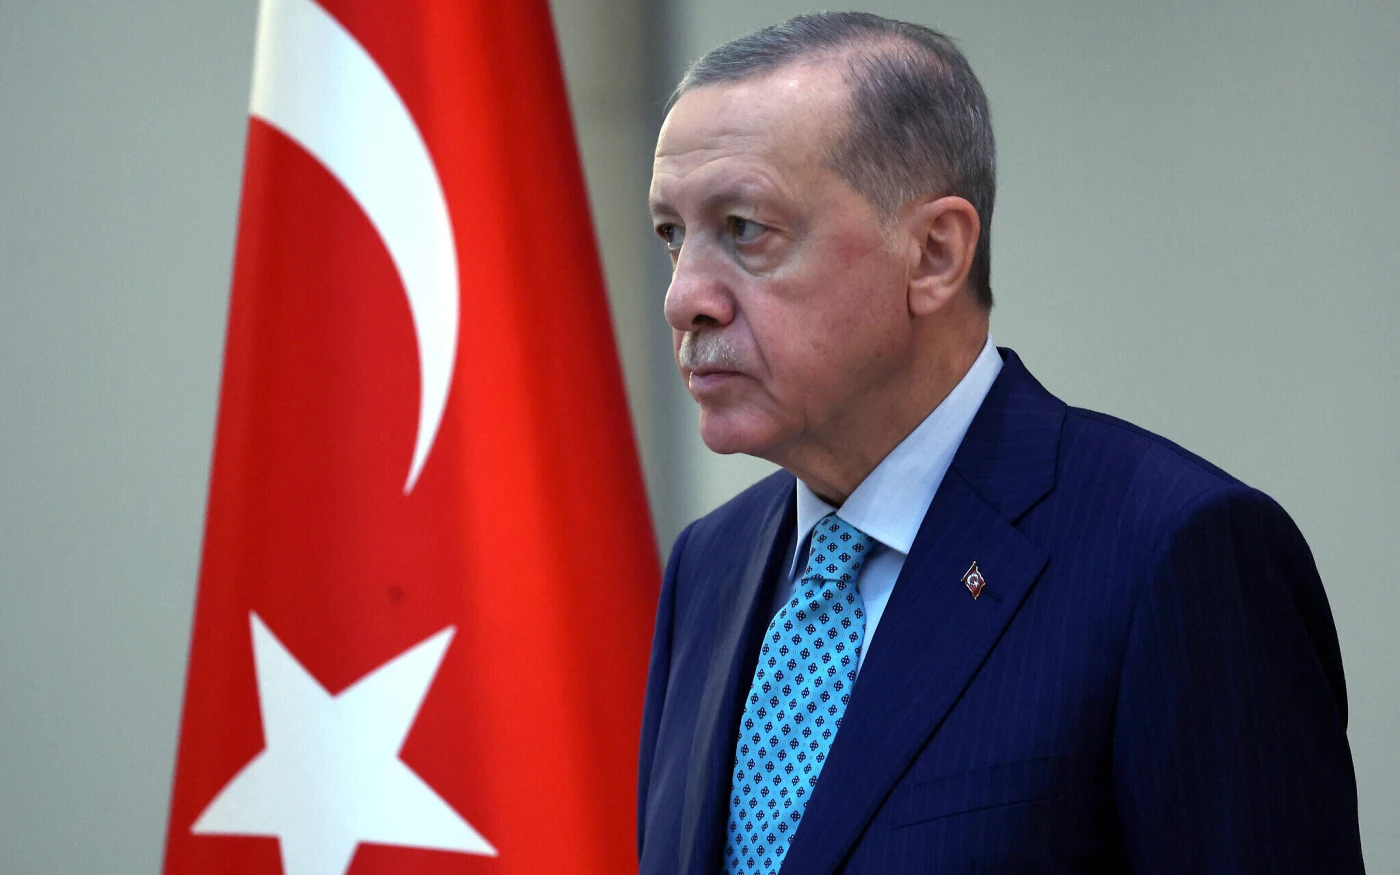 Turkey aims toRead More